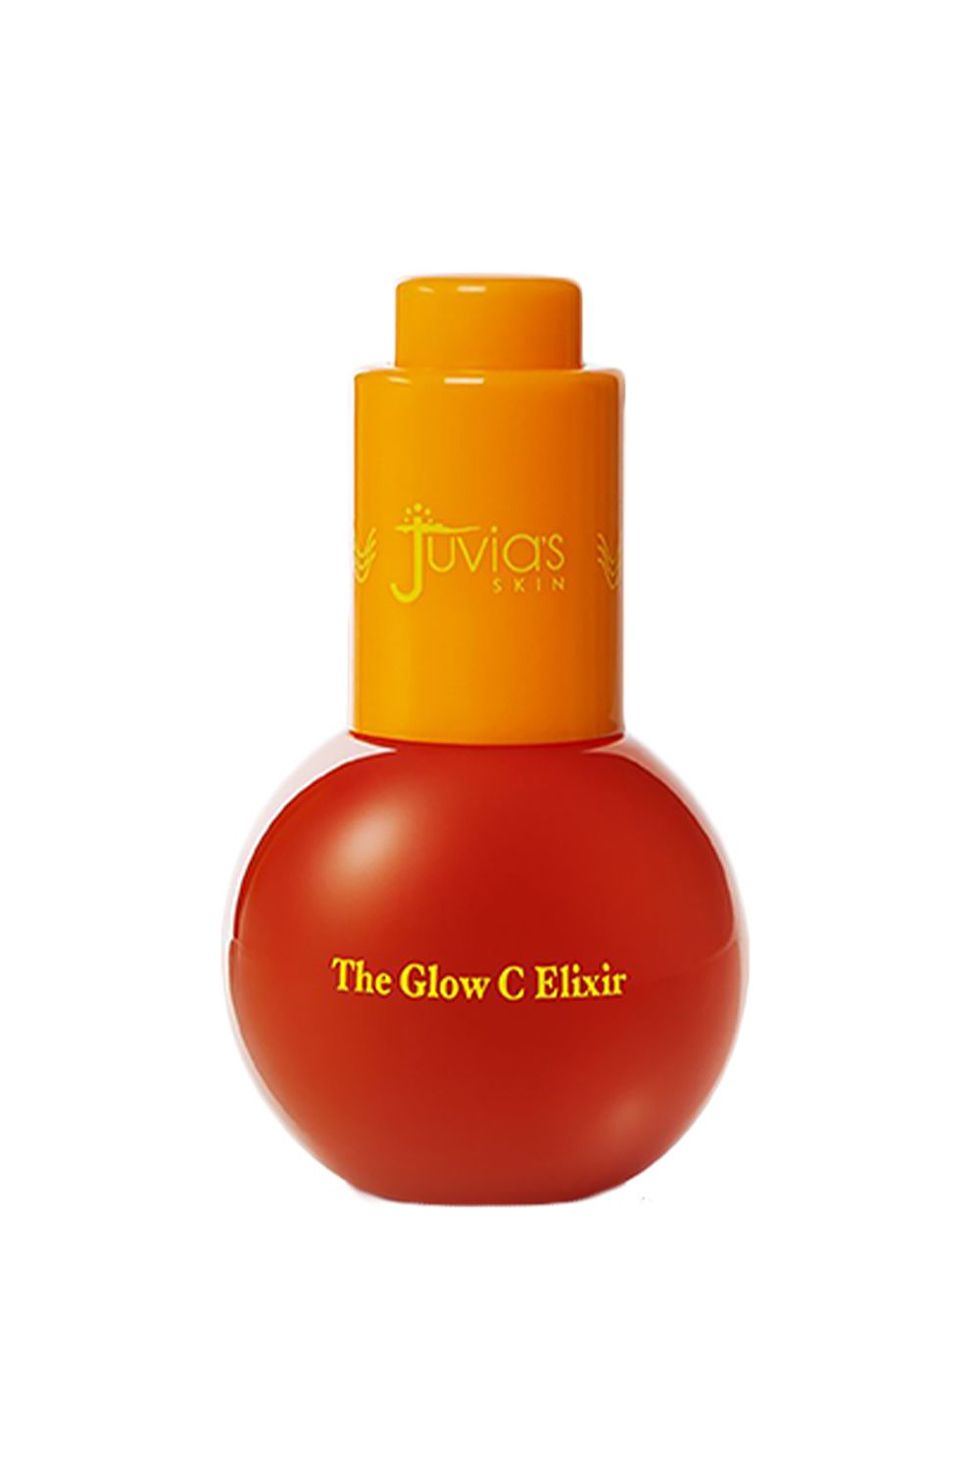 The Glow C Elixir